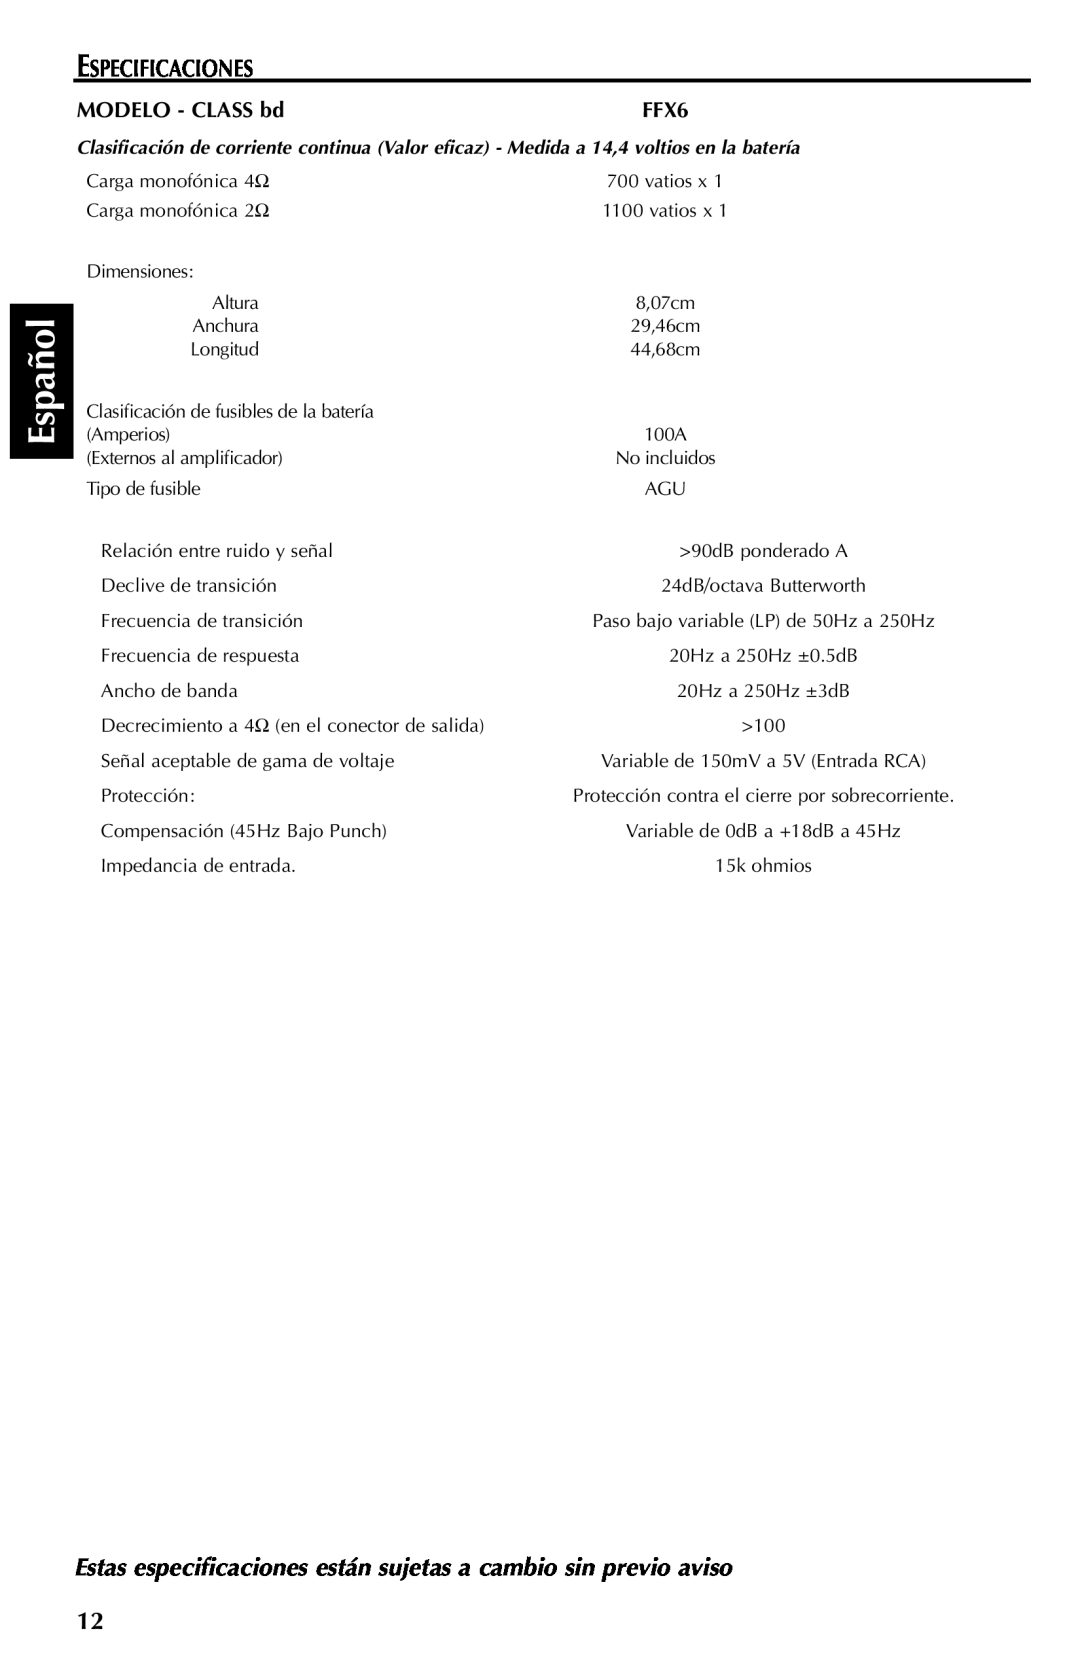 Rockford Fosgate FFX6 manual Español, Especificaciones, MODELO - CLASS bd 